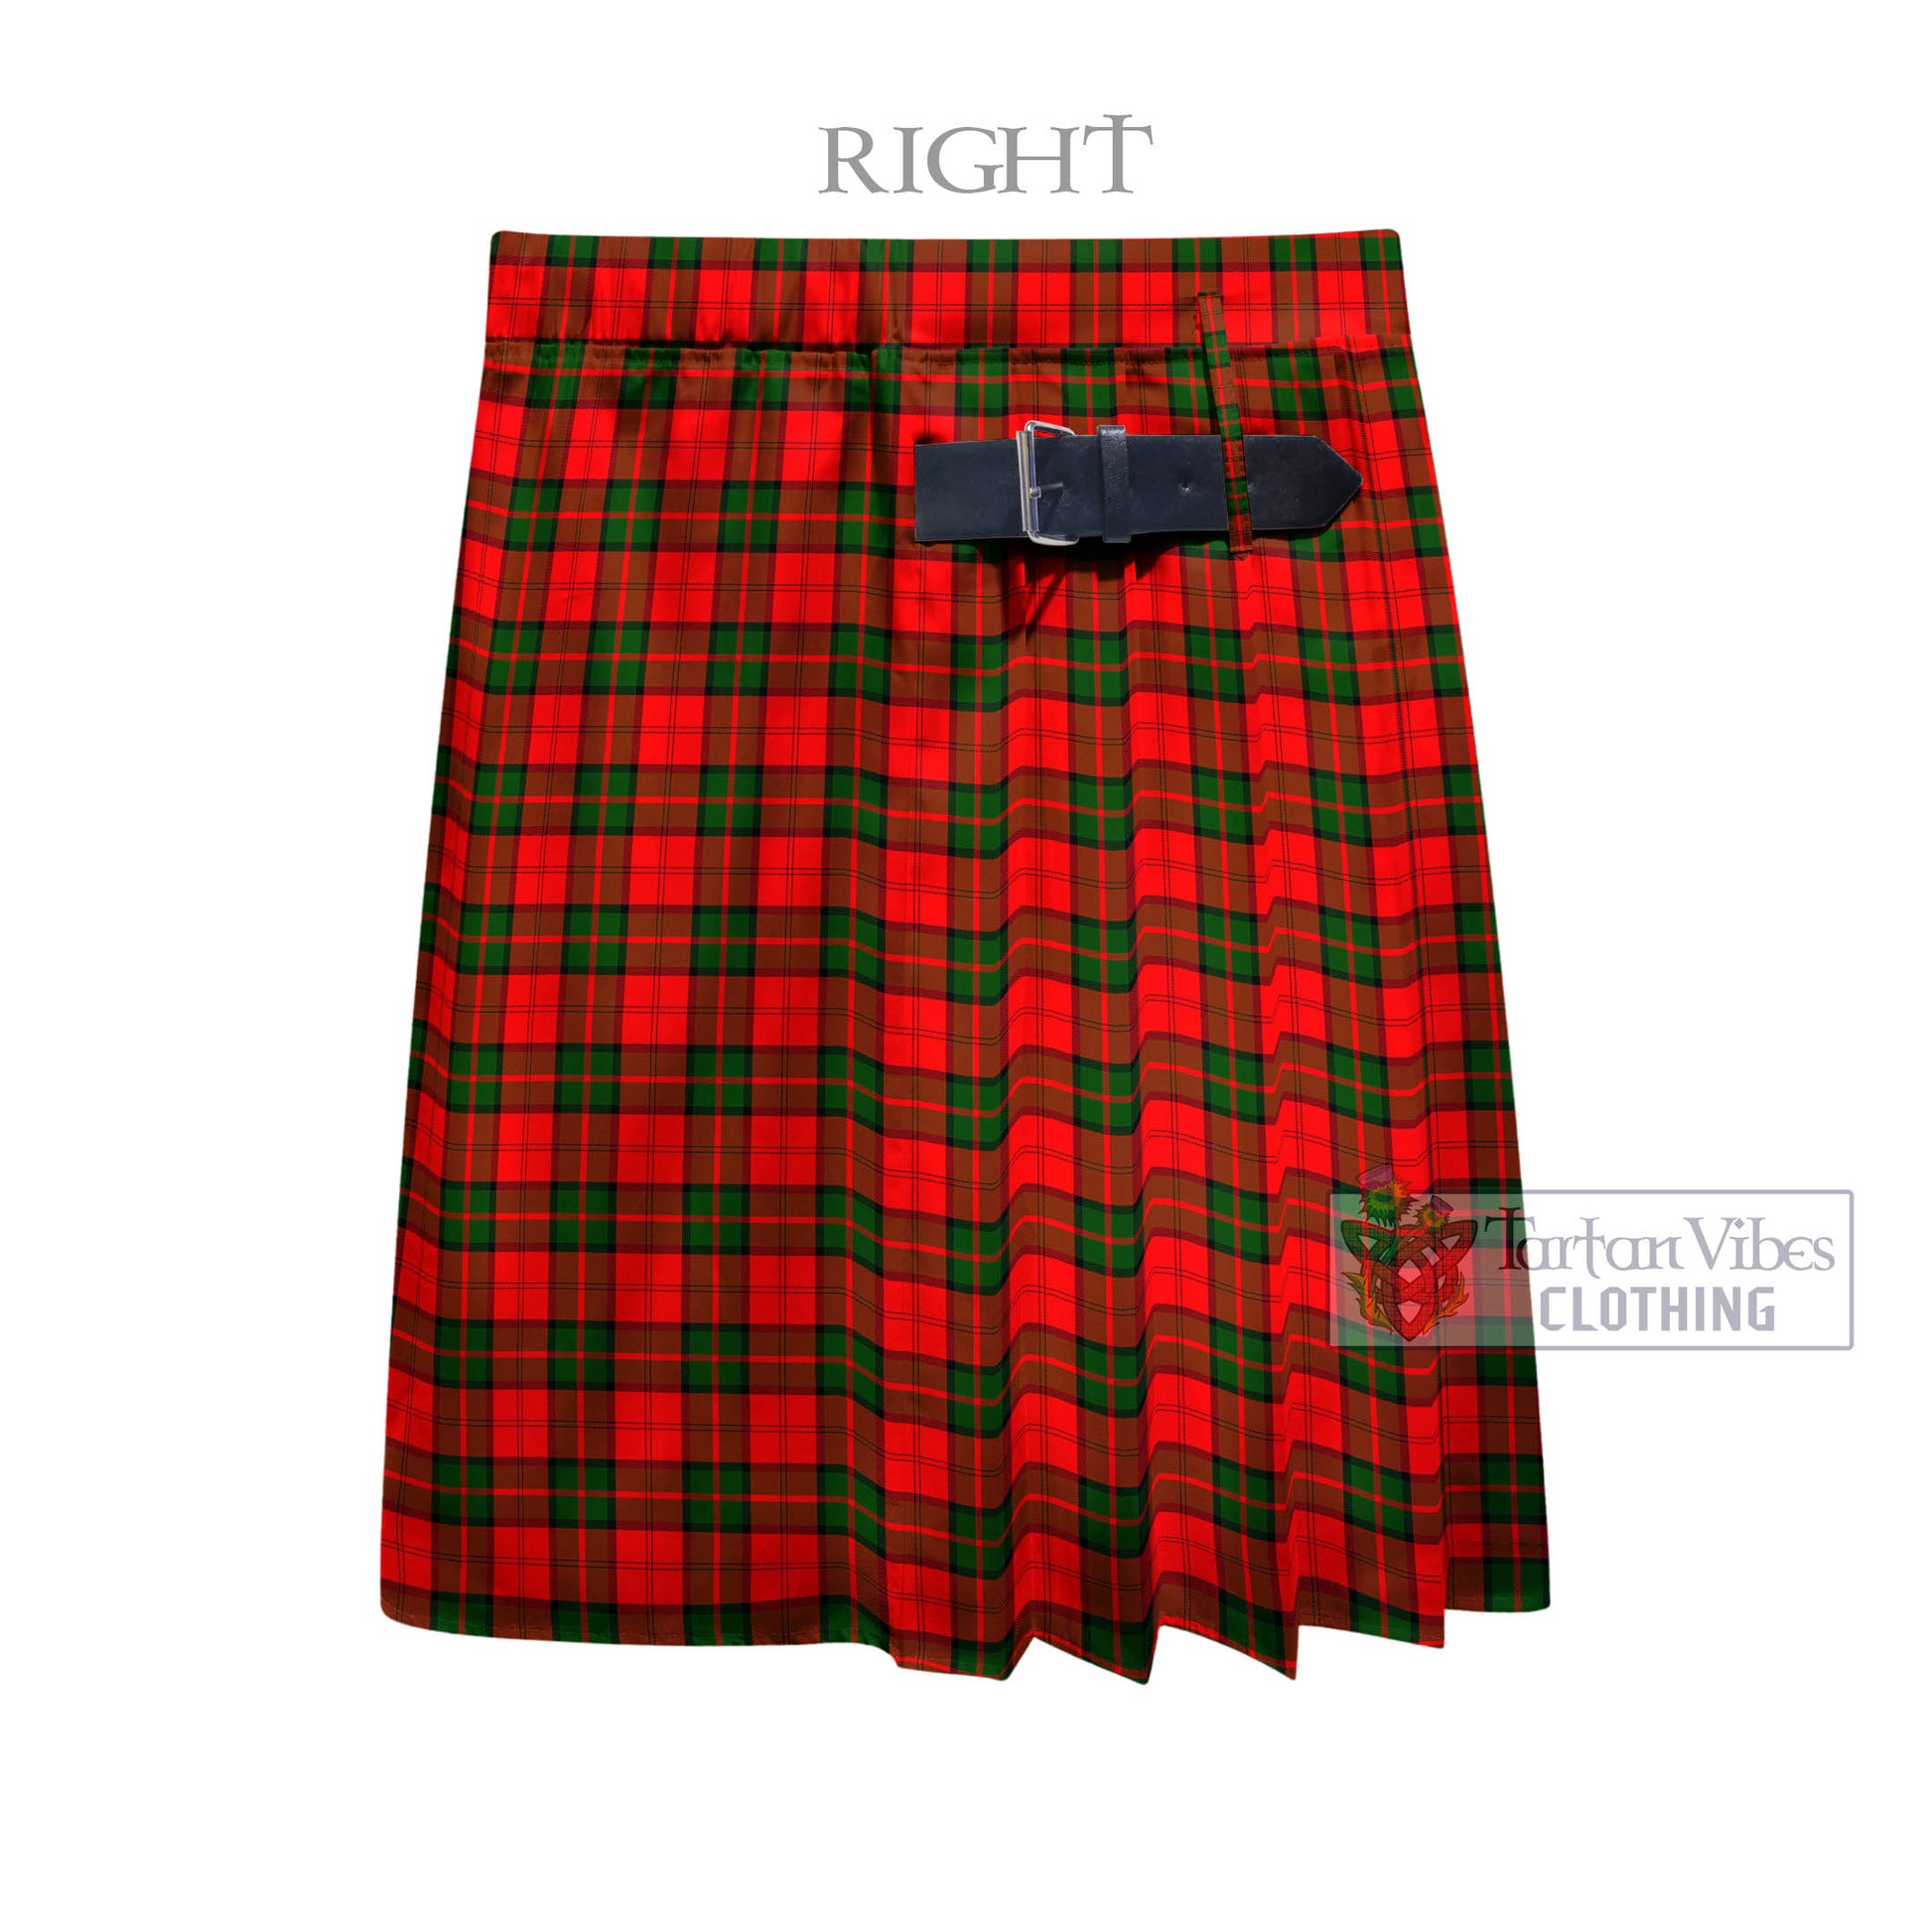 Tartan Vibes Clothing Dunbar Modern Tartan Men's Pleated Skirt - Fashion Casual Retro Scottish Style